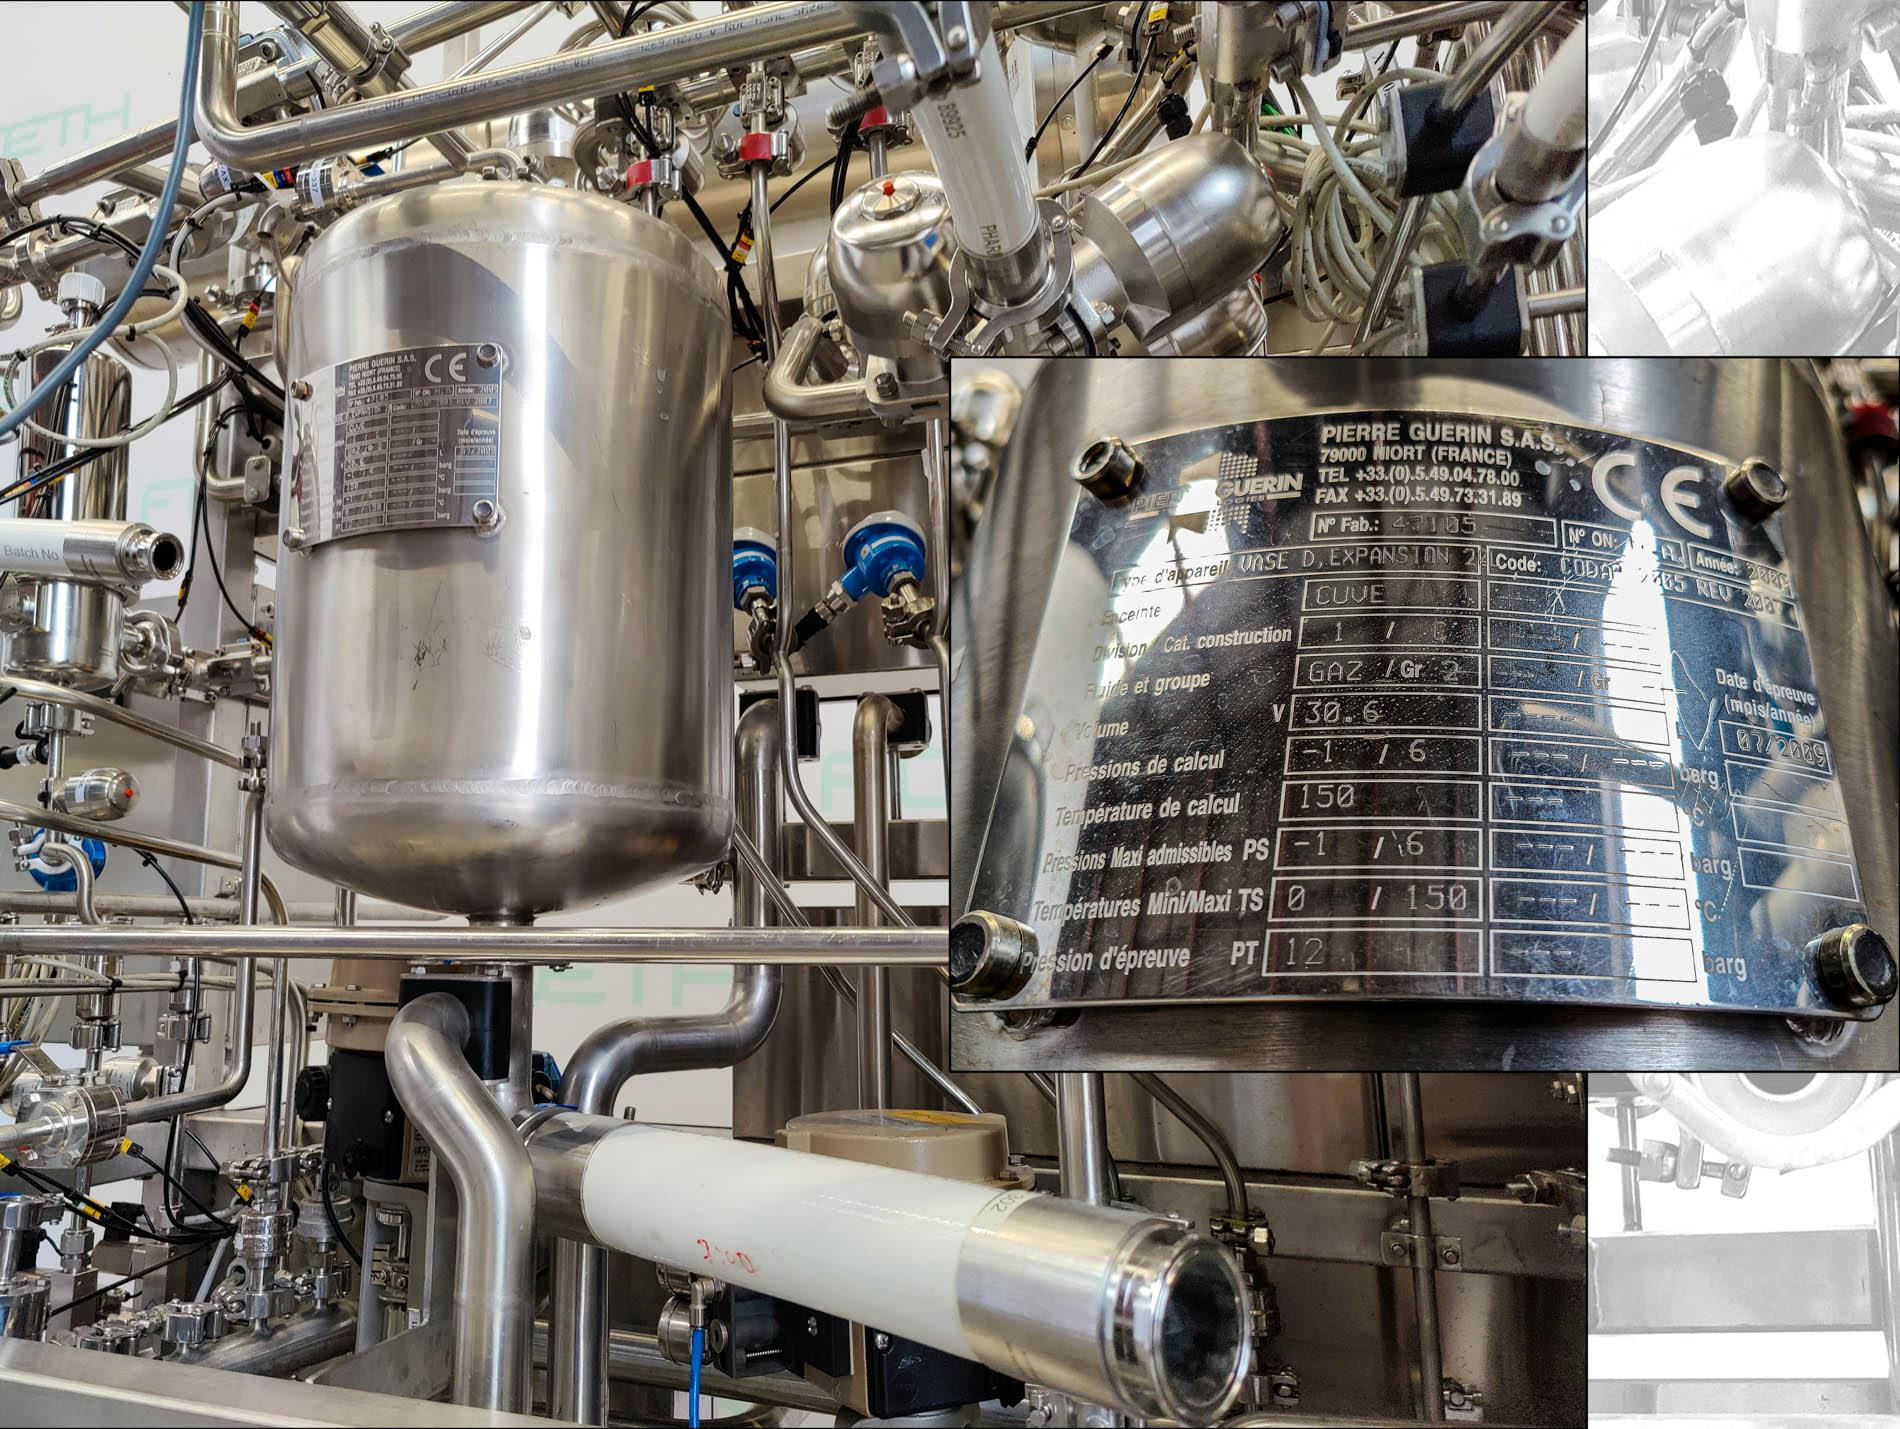 Pierre Guerin Bioreactor 750L - Reactor de aço inoxidável - image 12